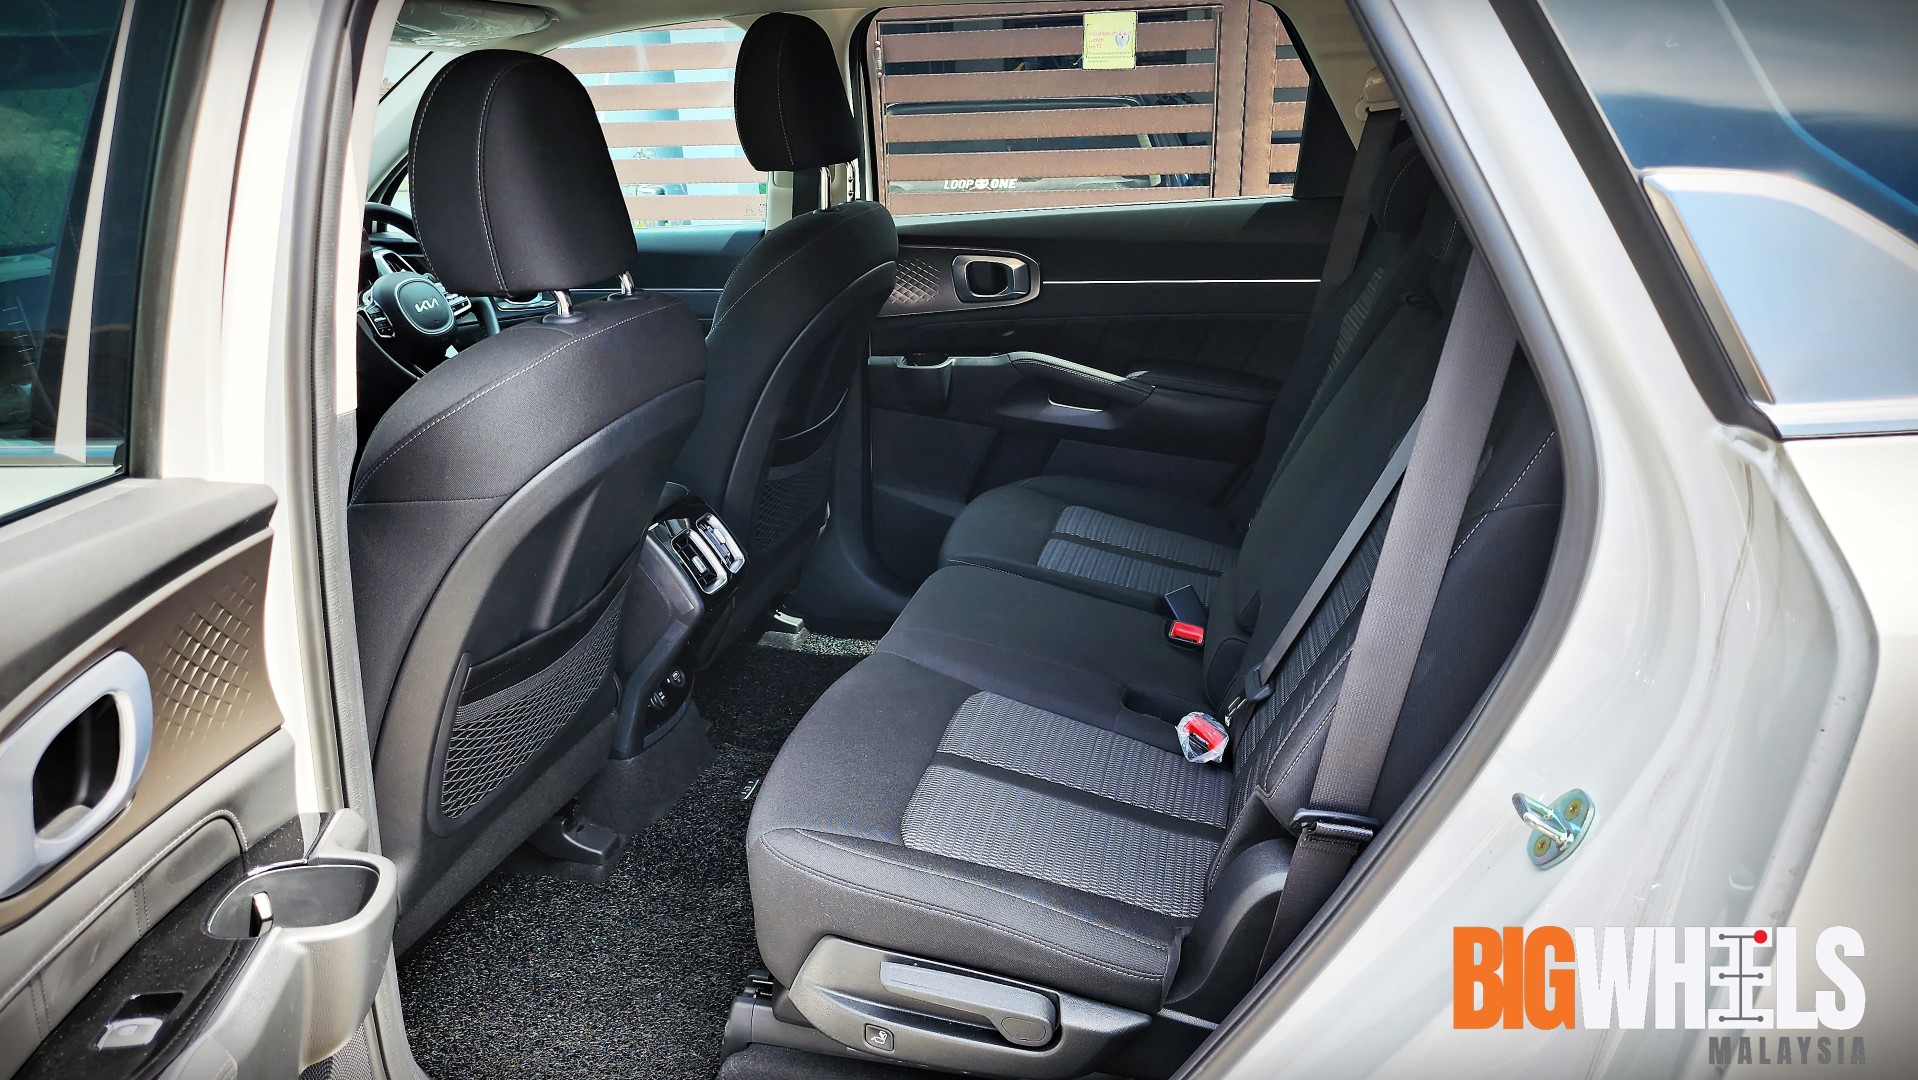 Kia Sorento 2.5G 2WD 7-Seater Review: Big Beautiful